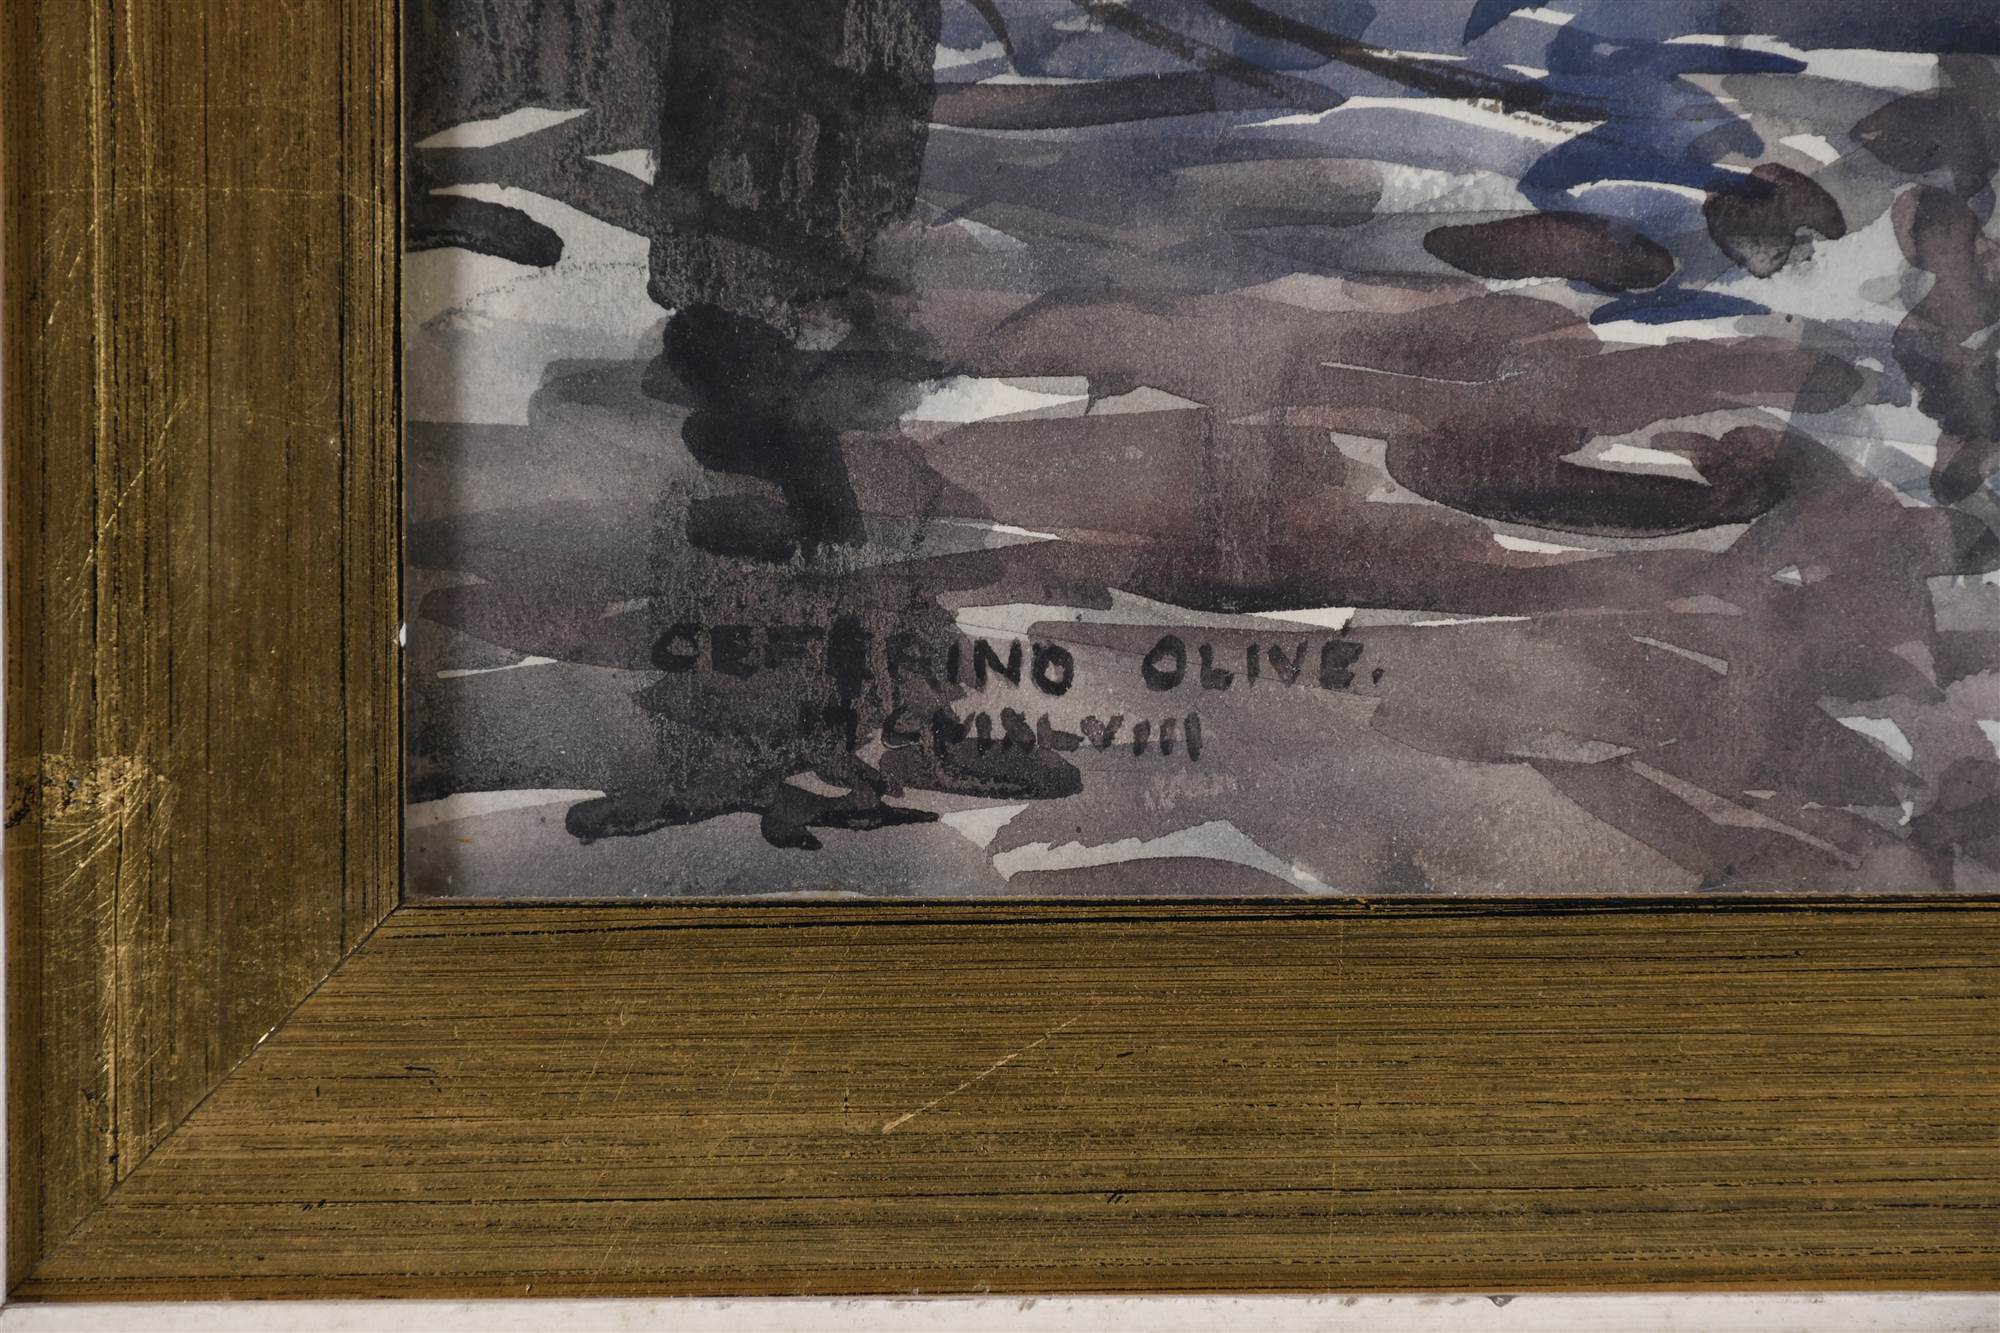 CEFERINO OLIVÉ (1907-1995). "PUERTO", 1948.